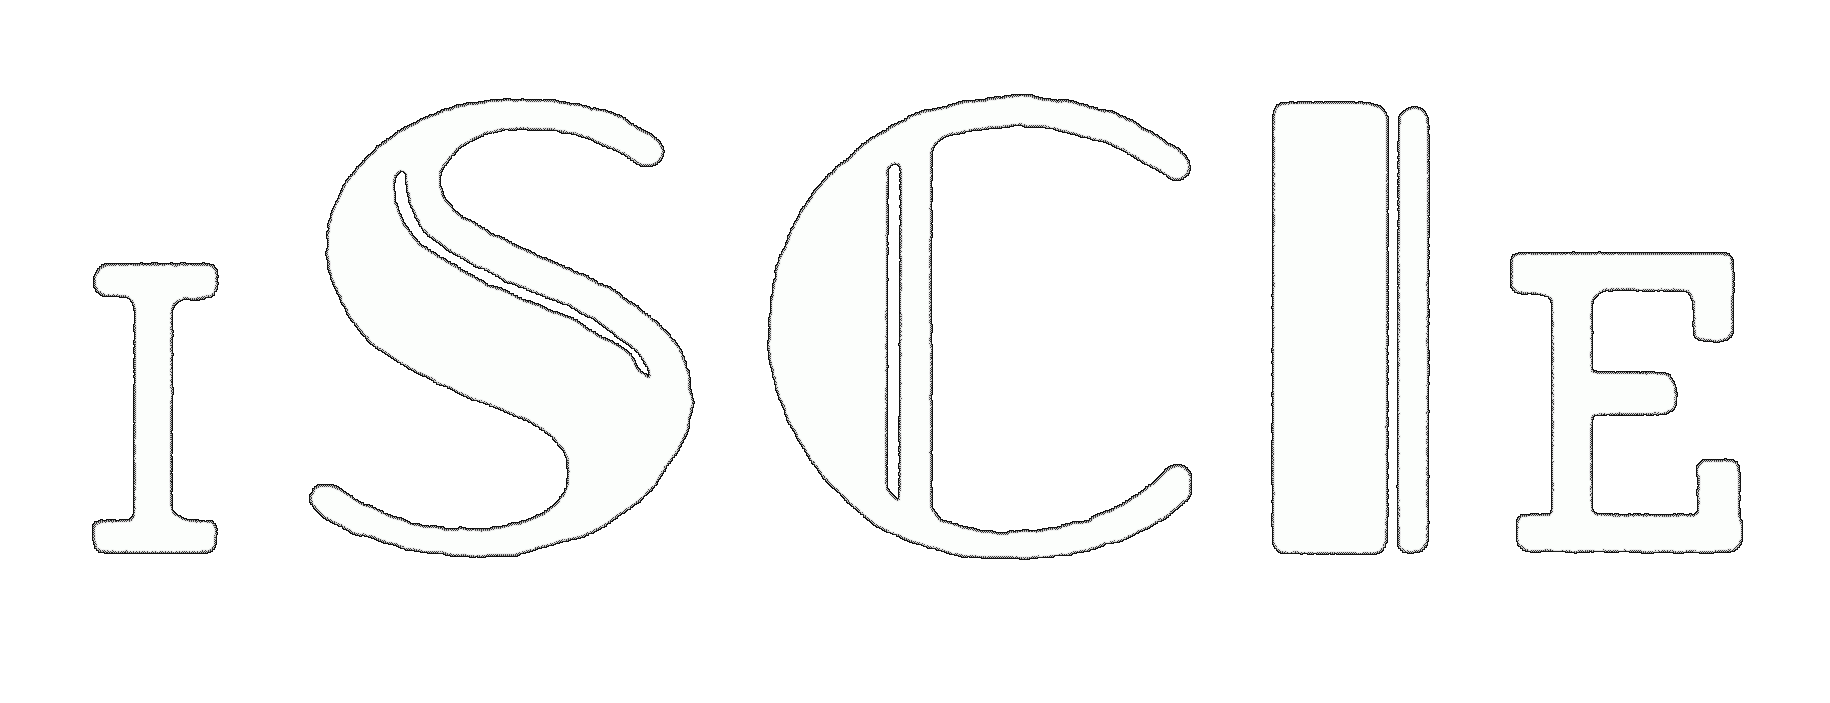 ISCIE logo